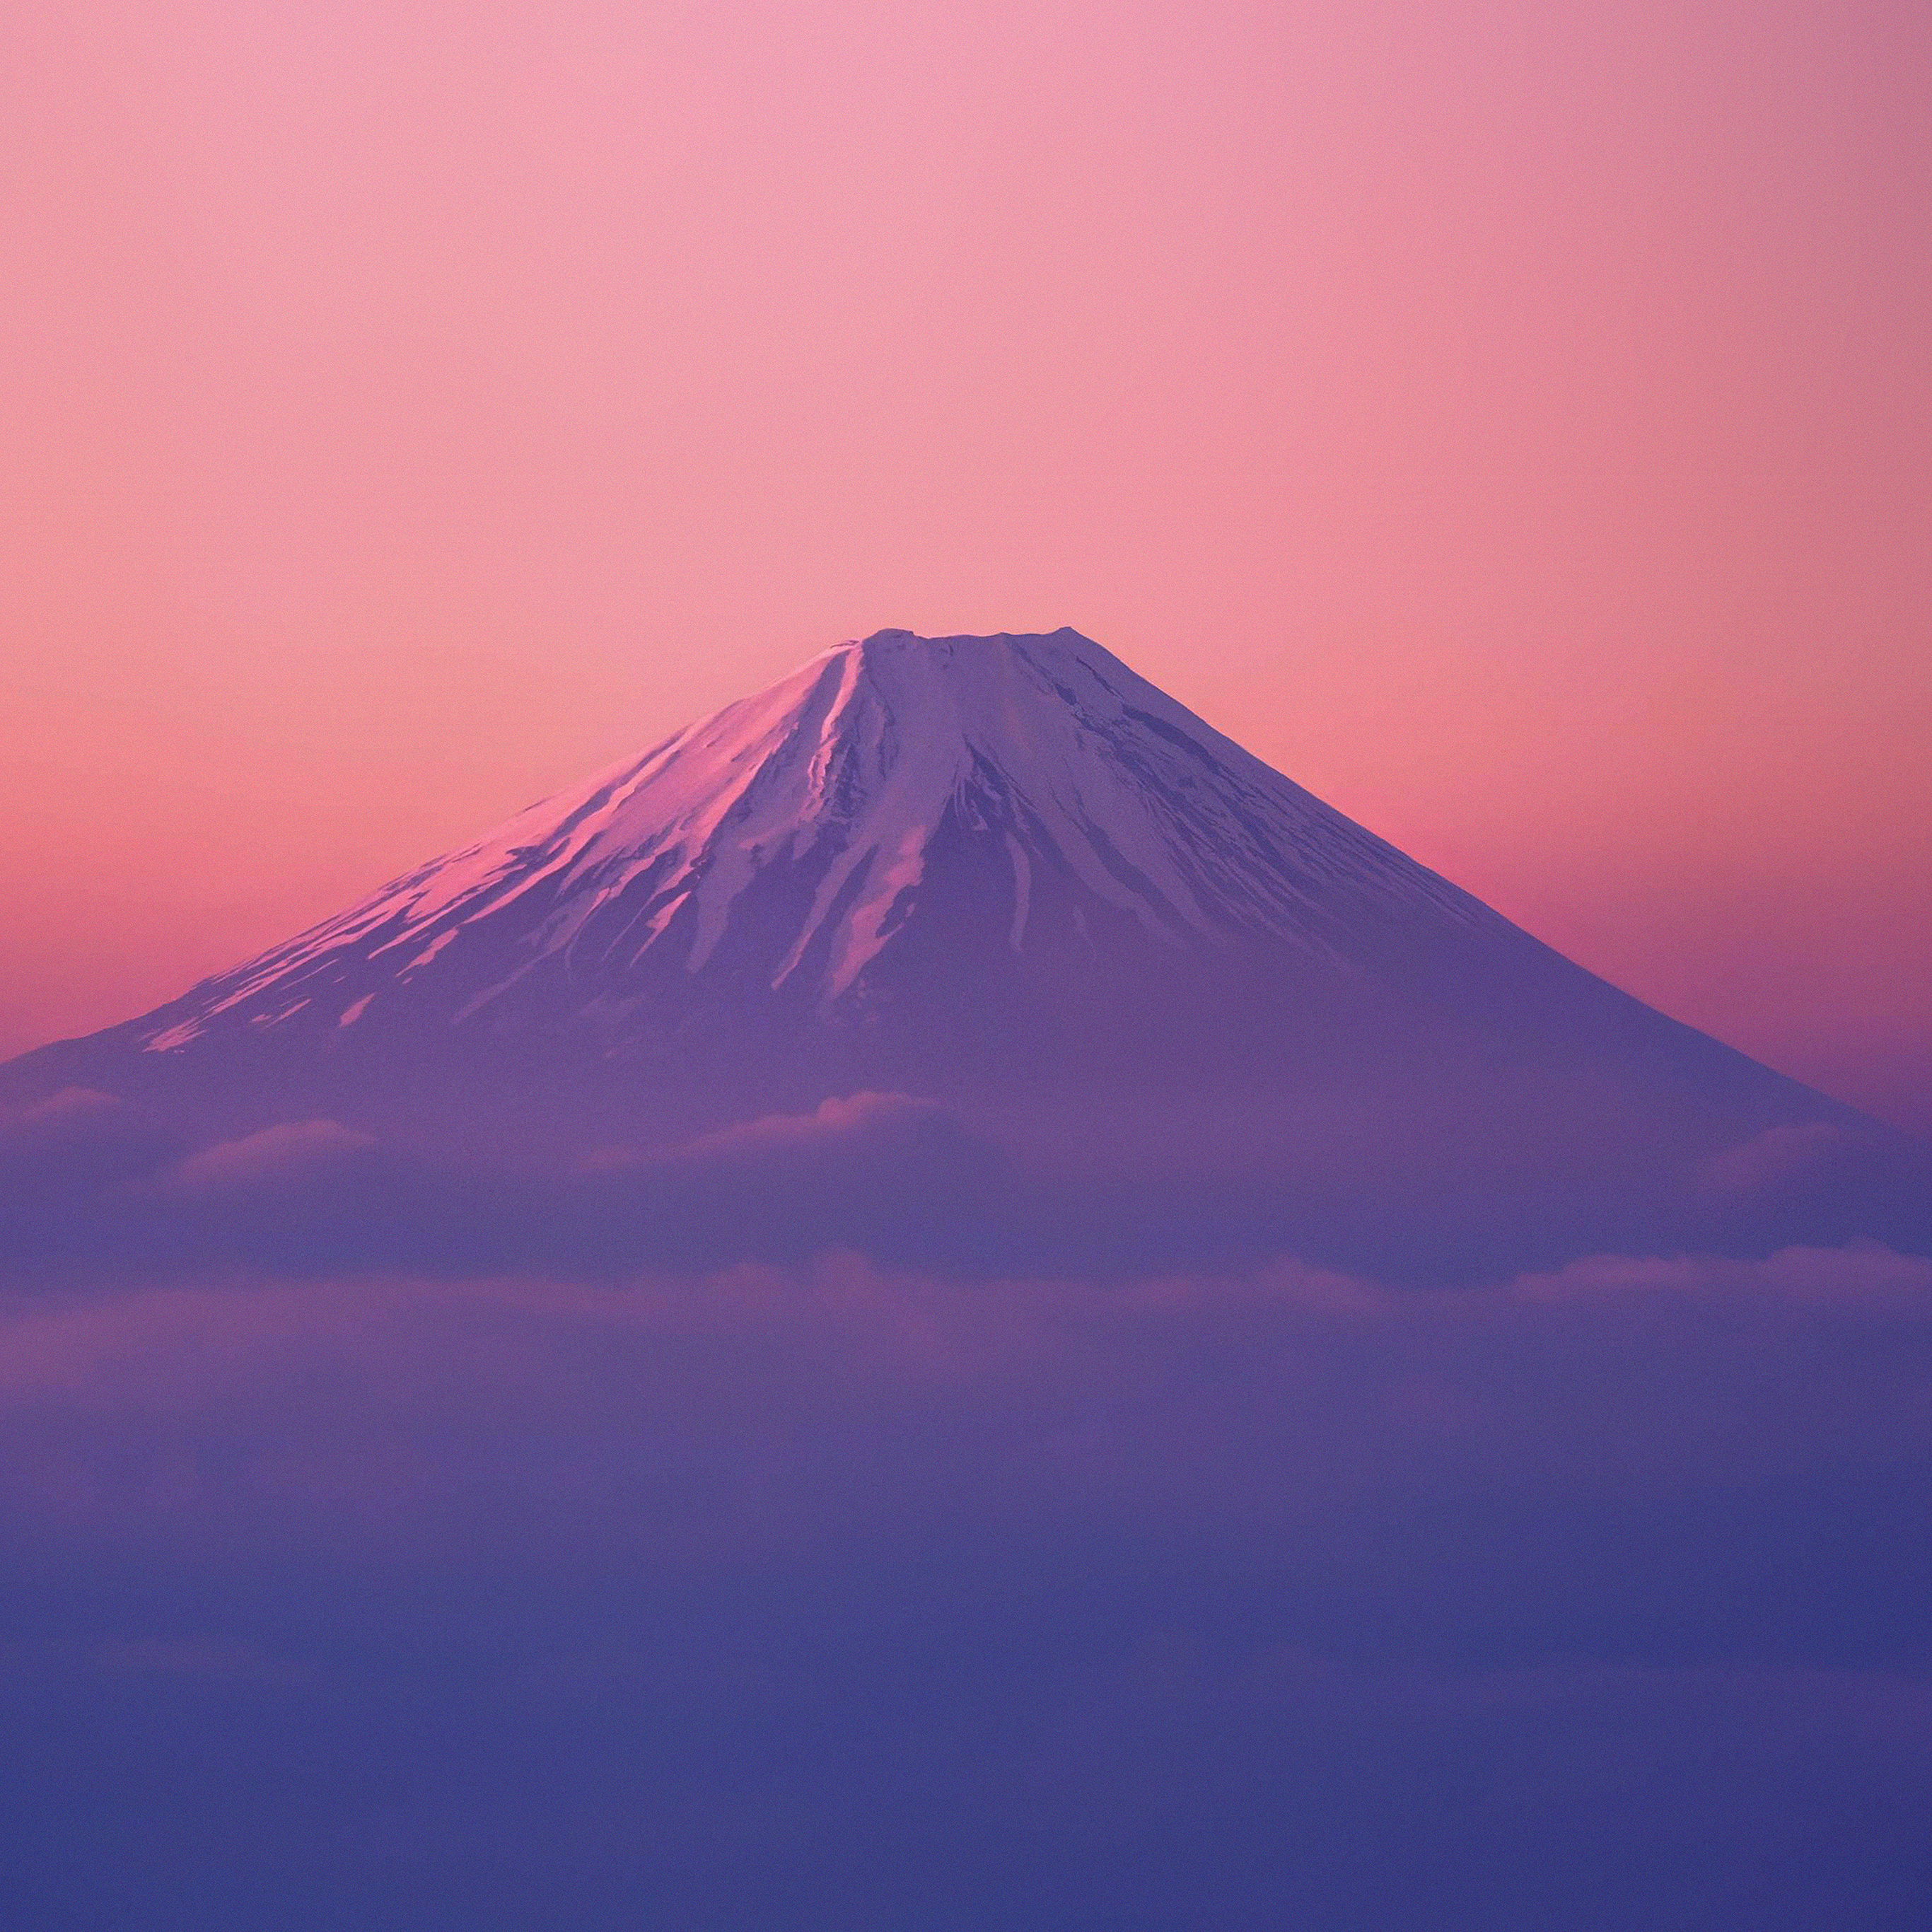 alone wallpaper,sky,stratovolcano,extinct volcano,mountain,pink